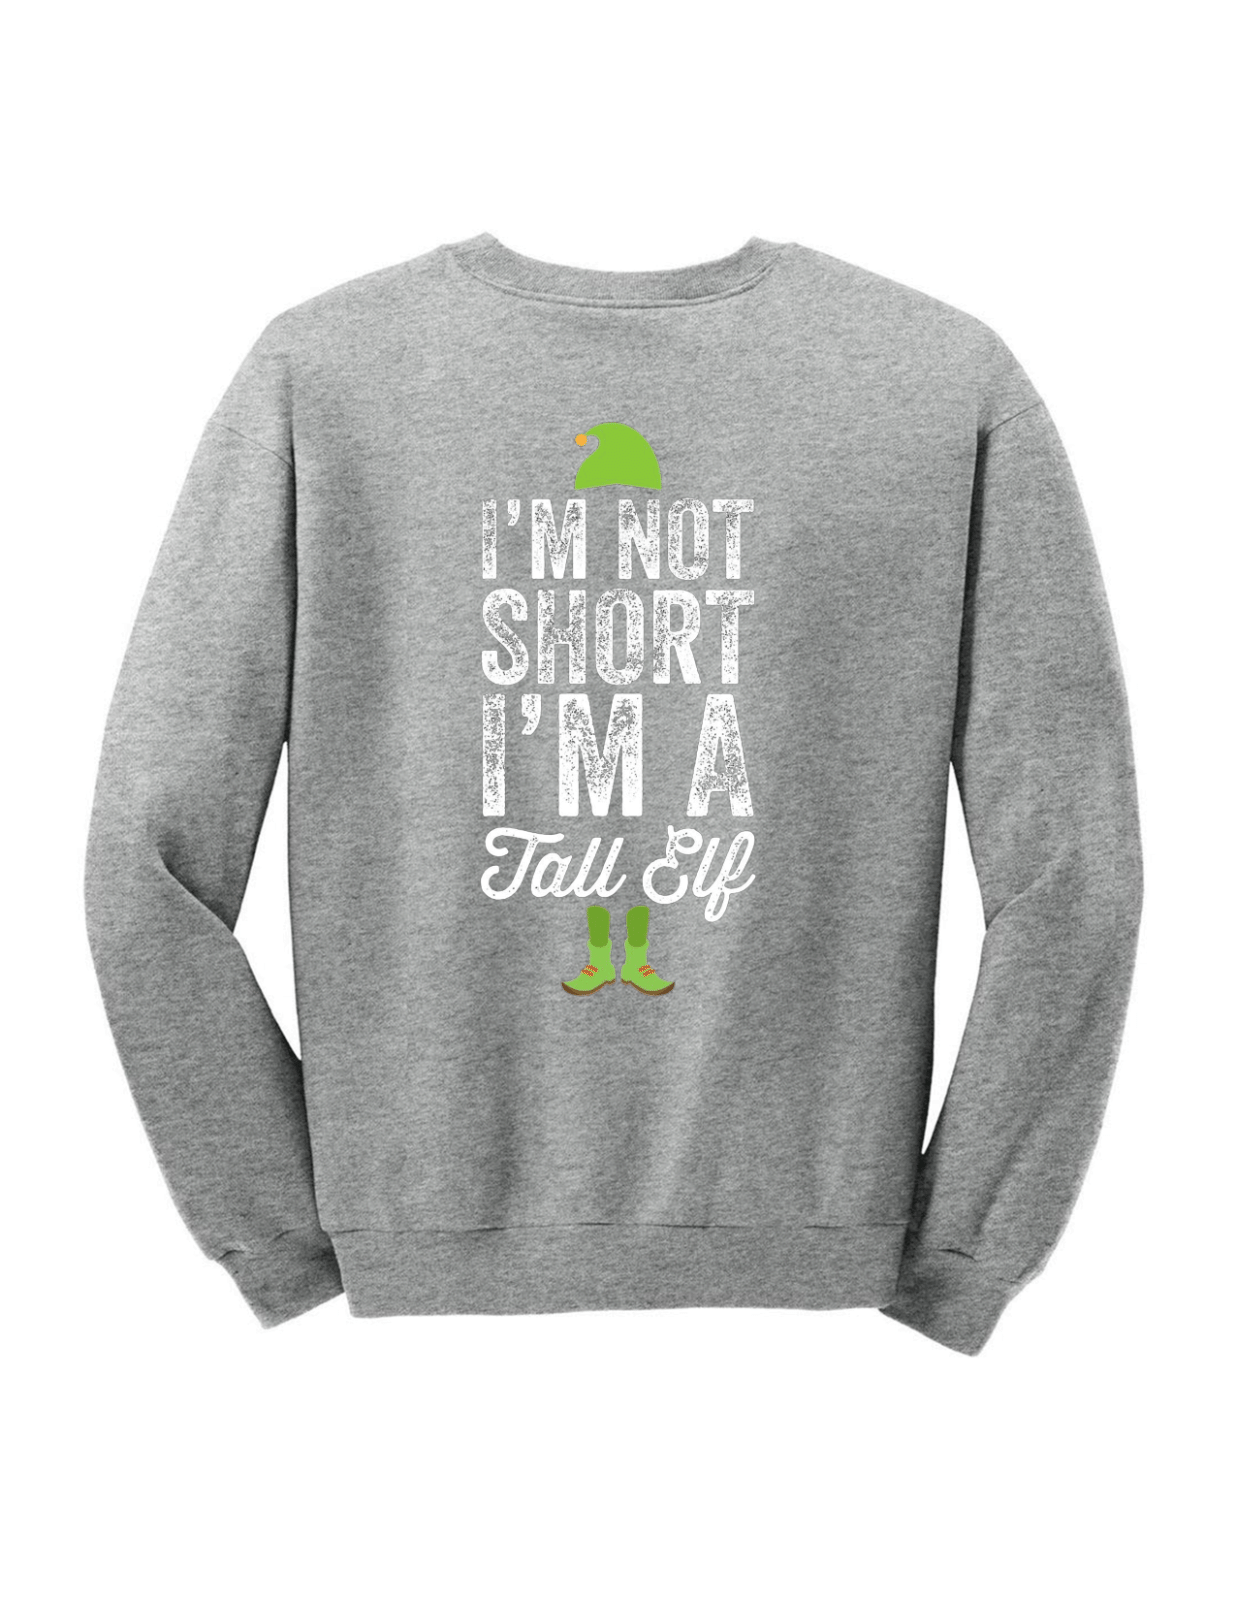 I am not short i'm tall ELF Christmas Sweatshirt - Funny Elf Jumper Style: Sweatshirt, Color: Gray